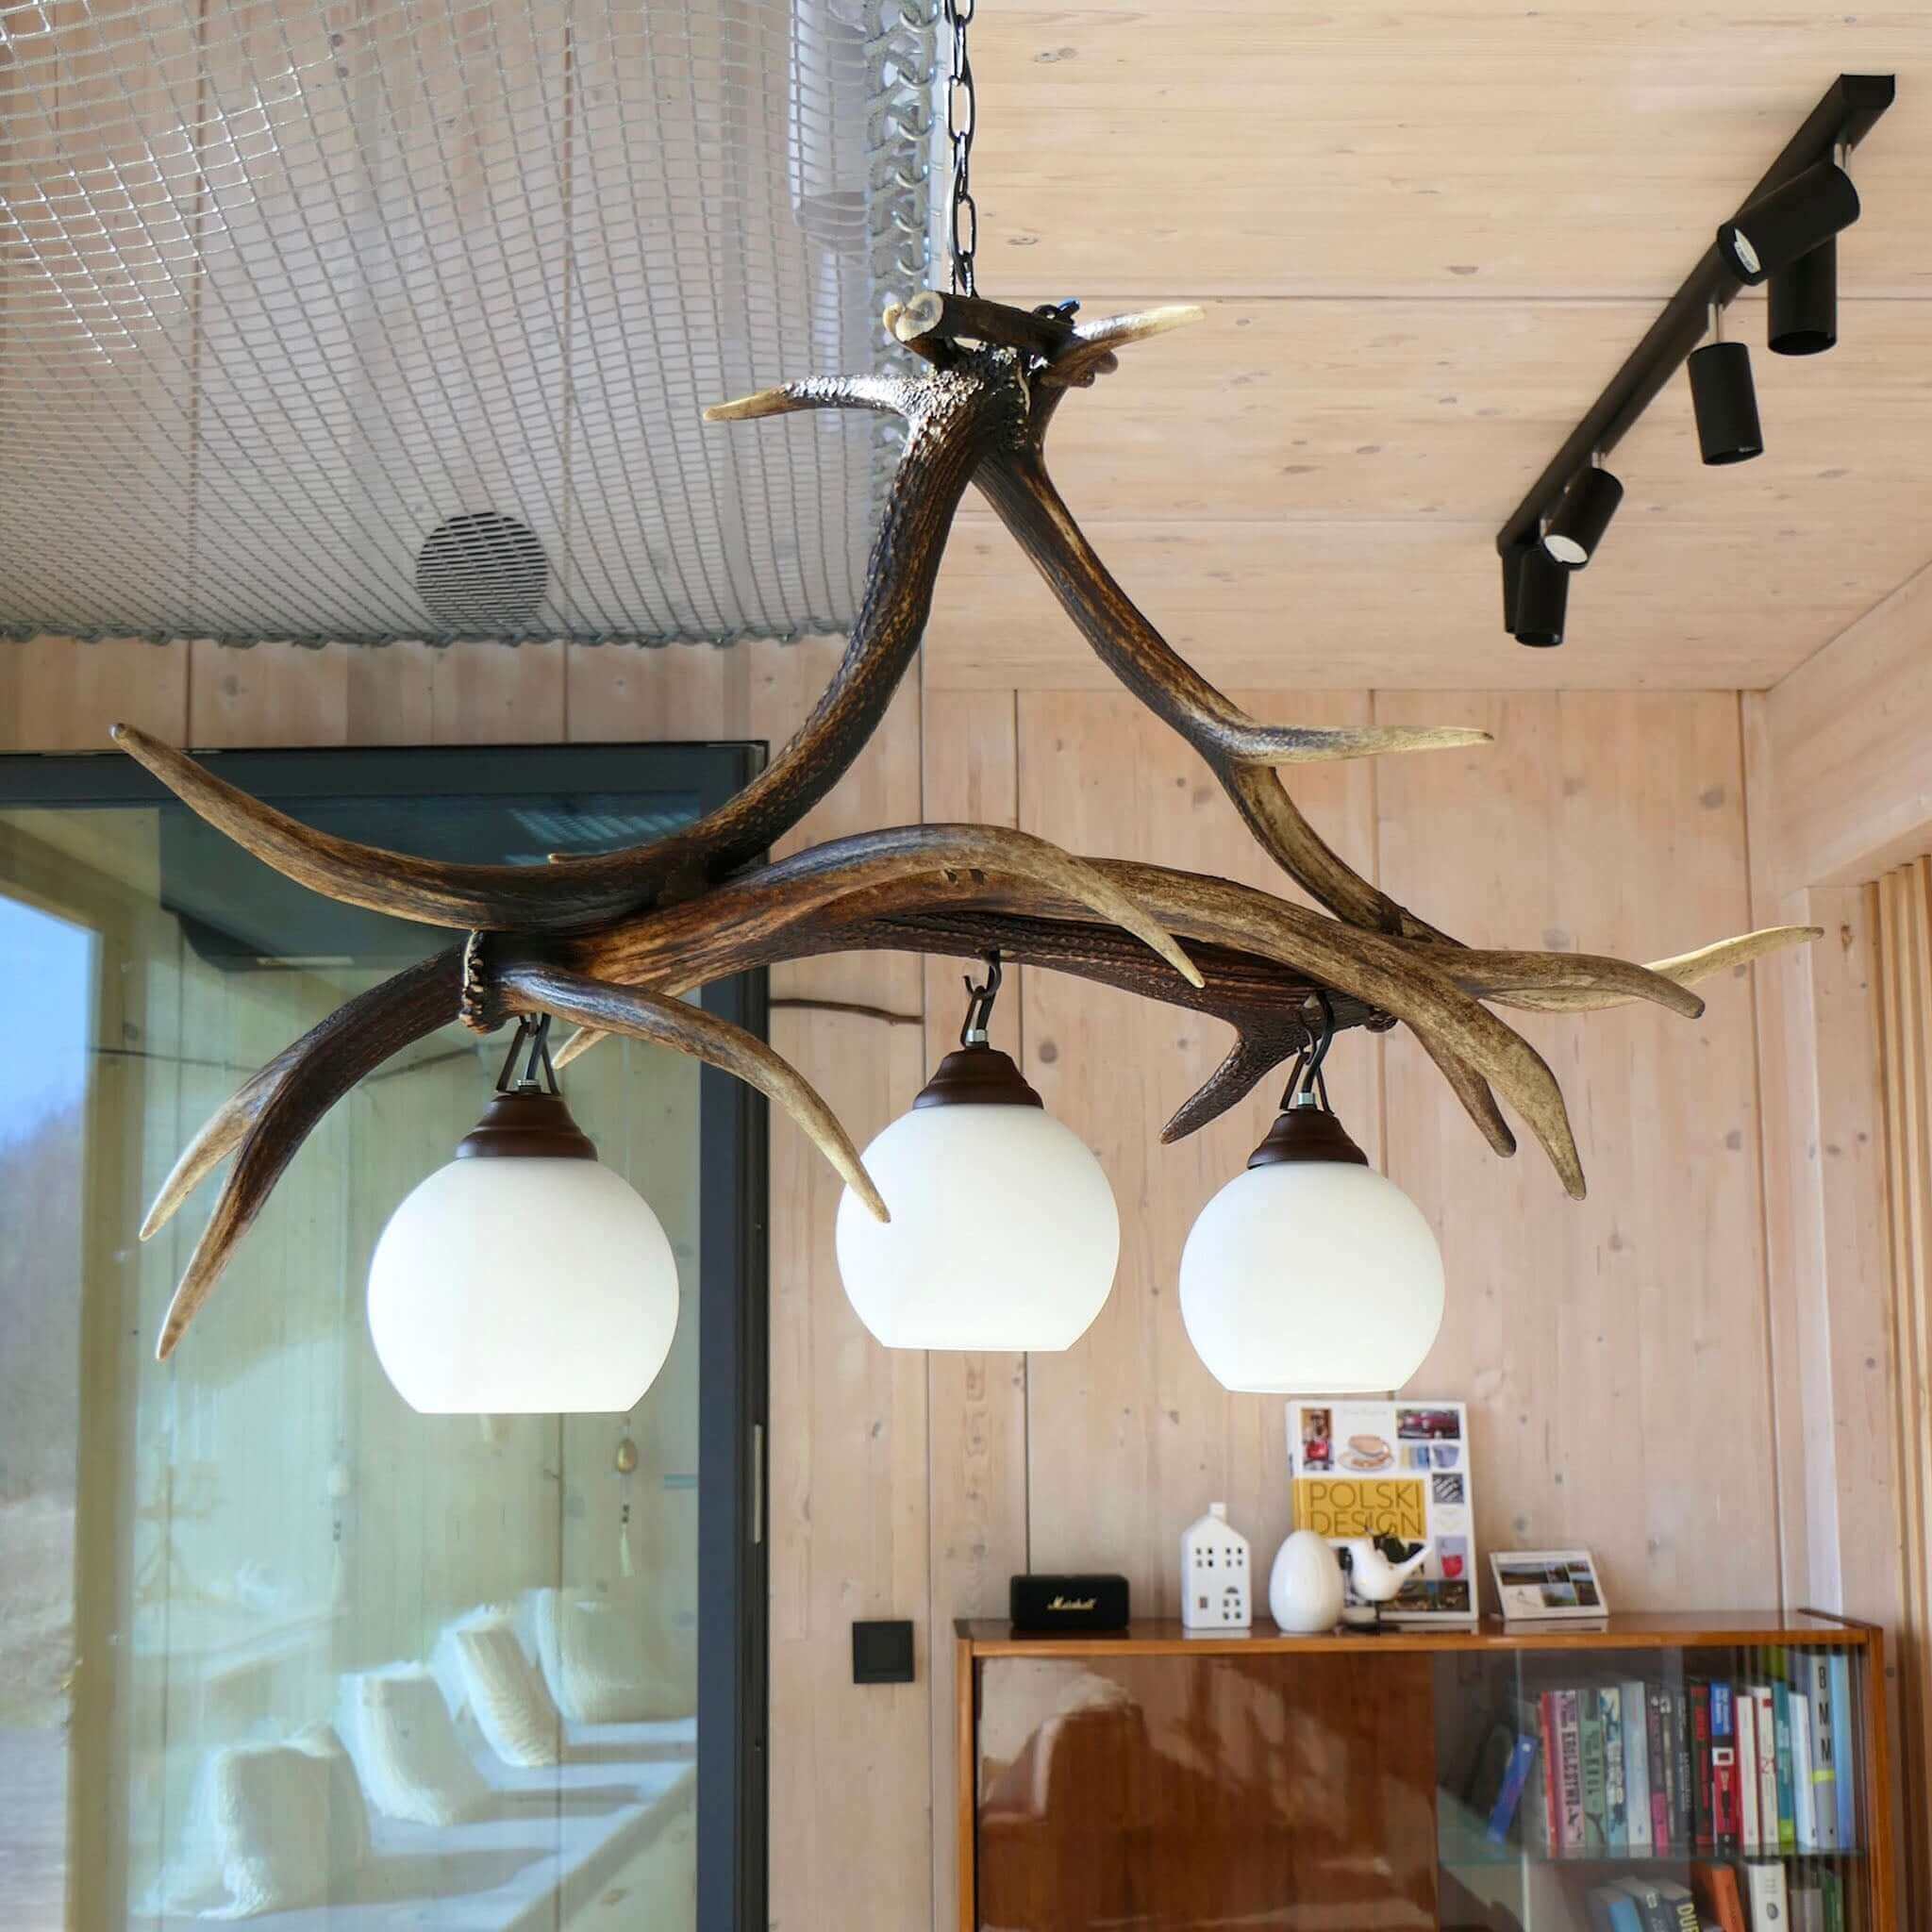 Rustic moose antler chandelier.